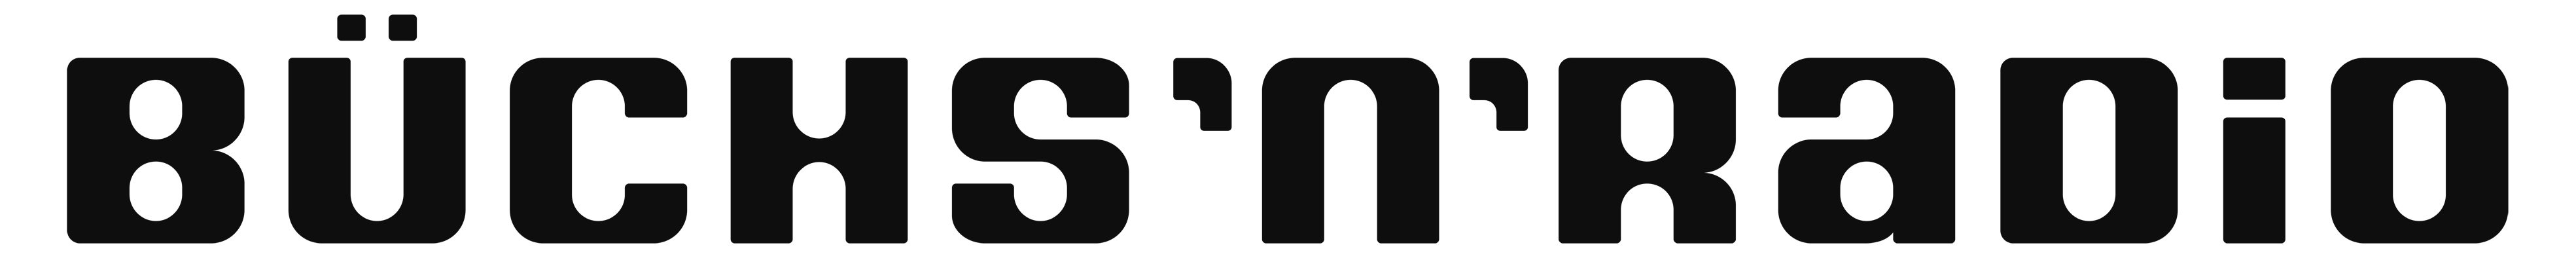 Buechsnradio_logo